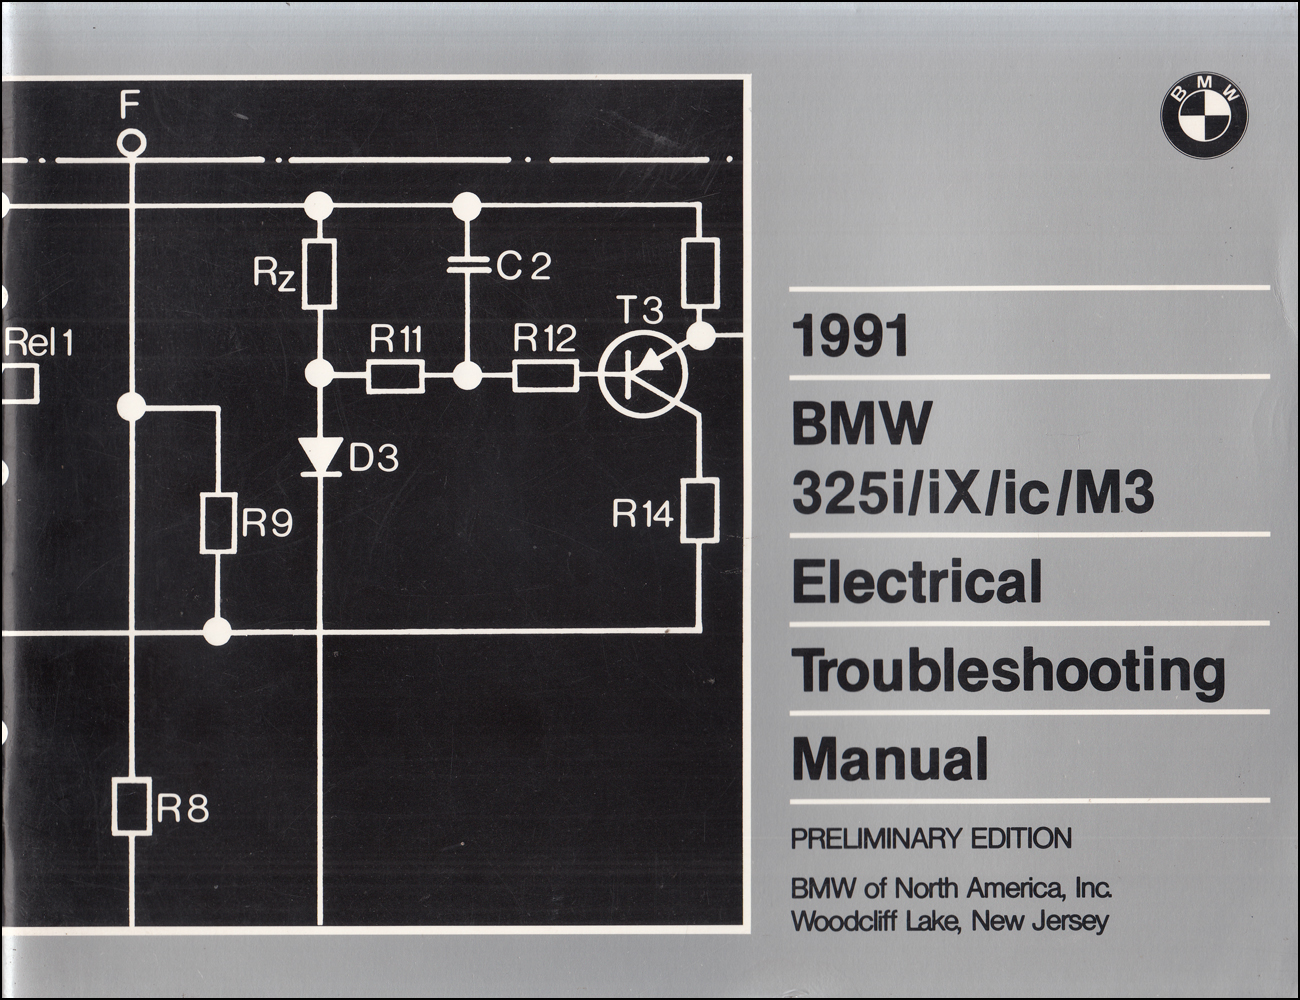 1991 BMW 325i/iX/ic/M3 Electrical Troubleshooting Manual Preliminary edition